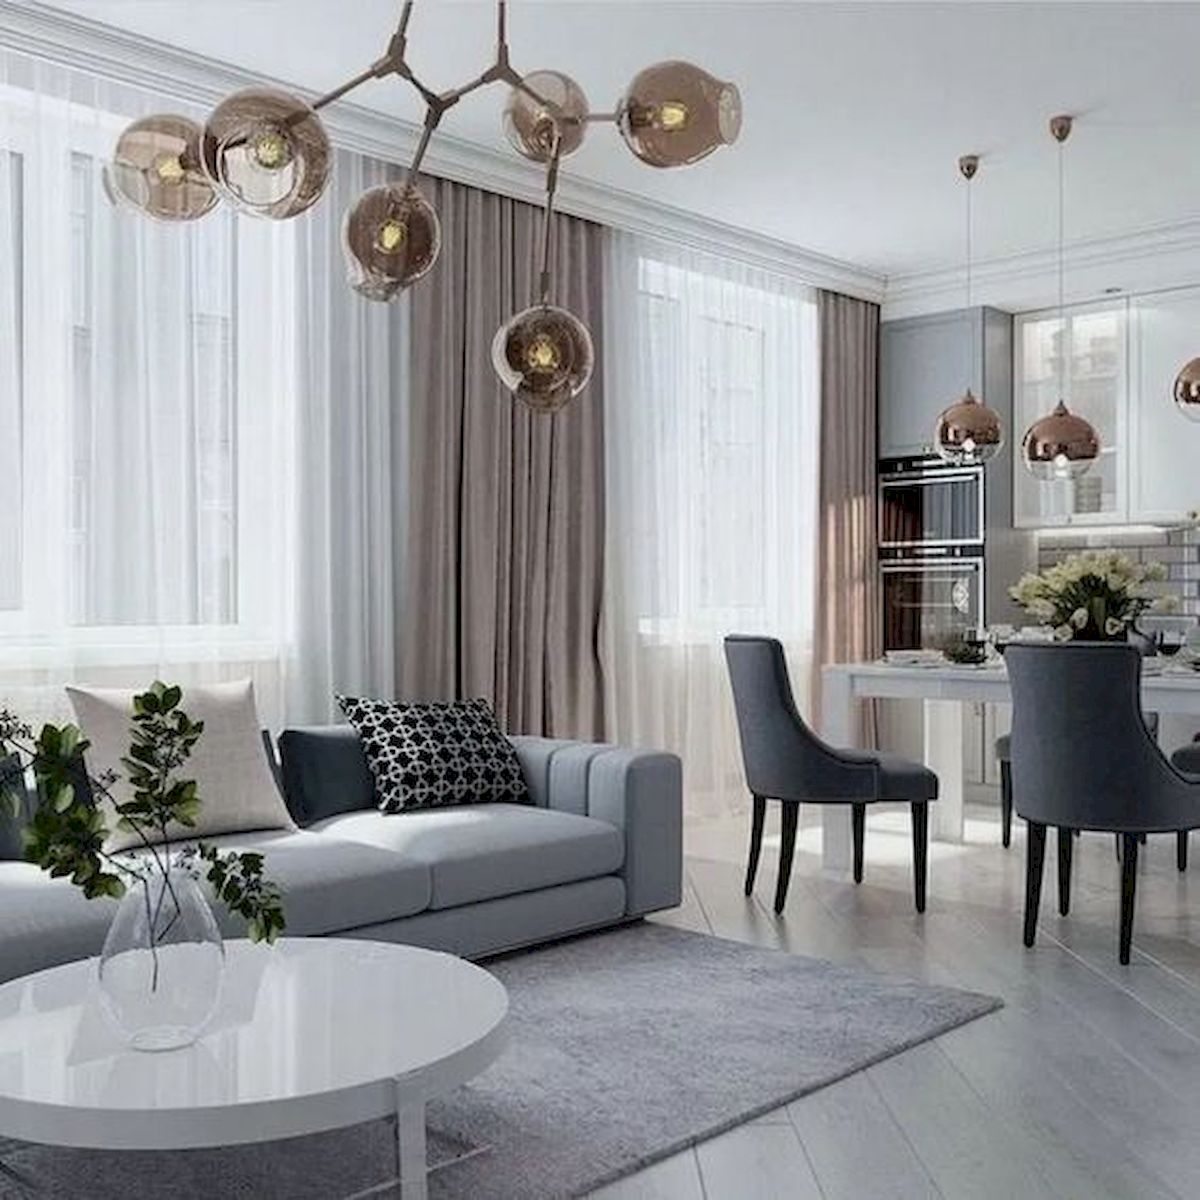 36 Elegant Living Room Design And Decor